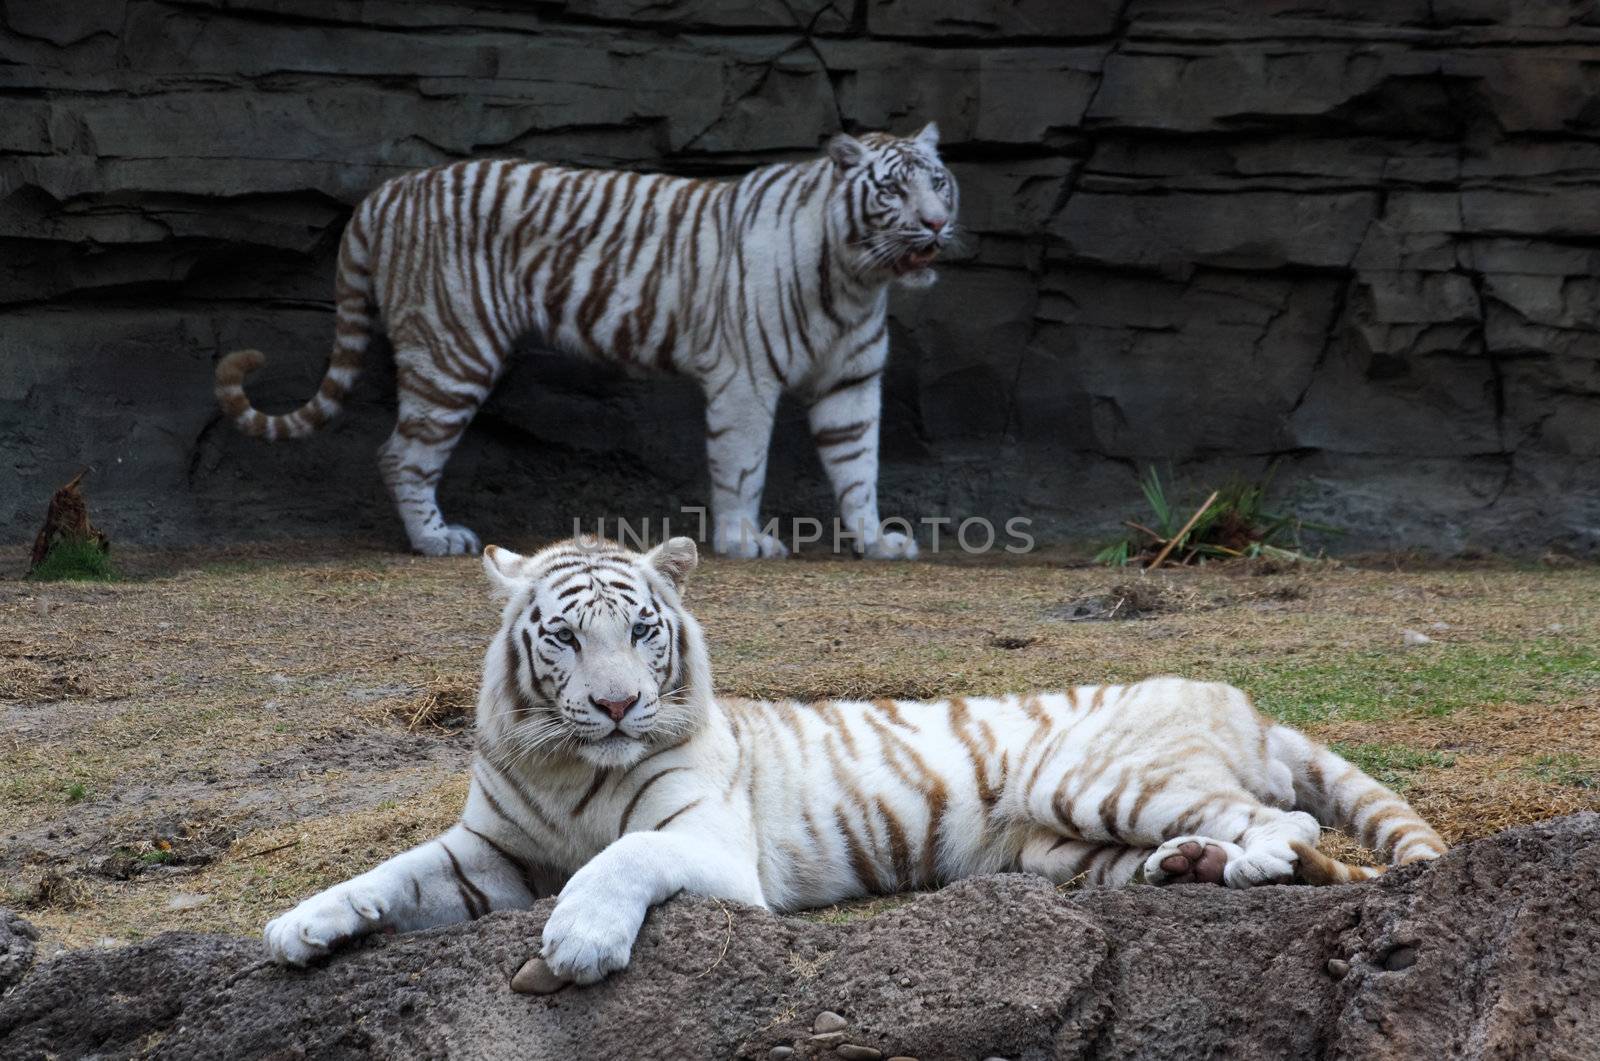 White tiger closeup by gary718